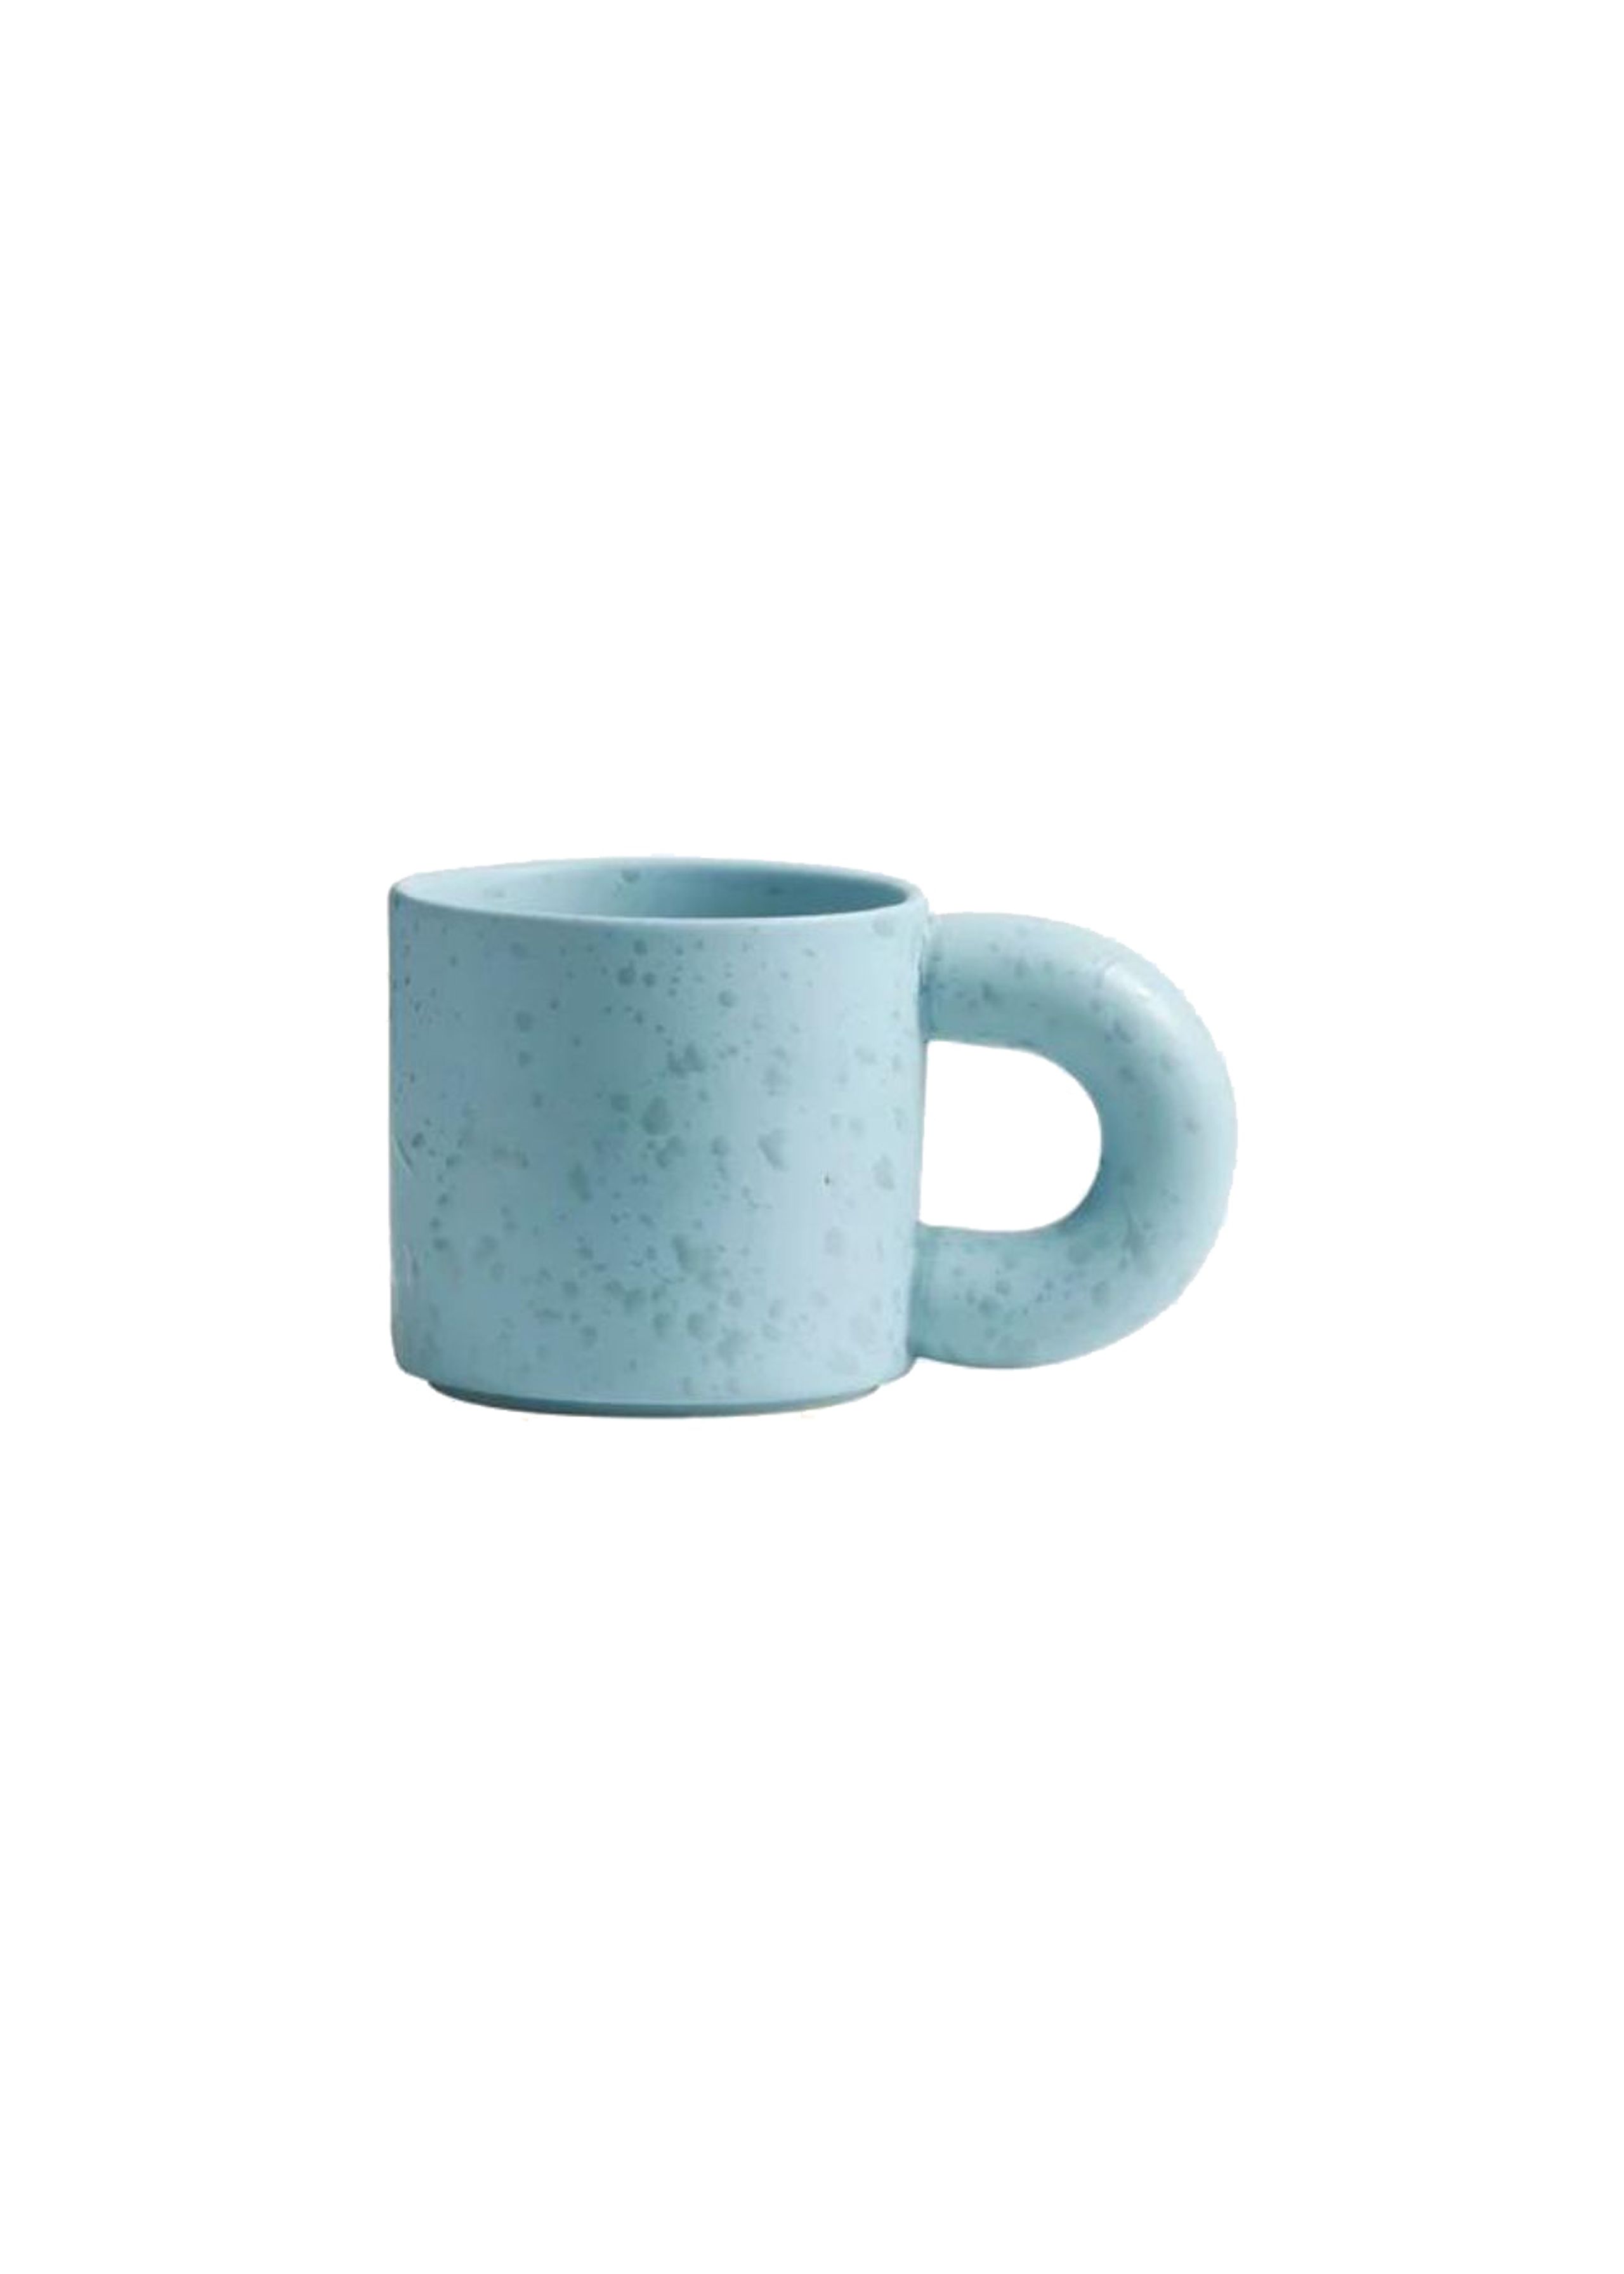 Nordal - Tasse - JOSE cup - Light blue